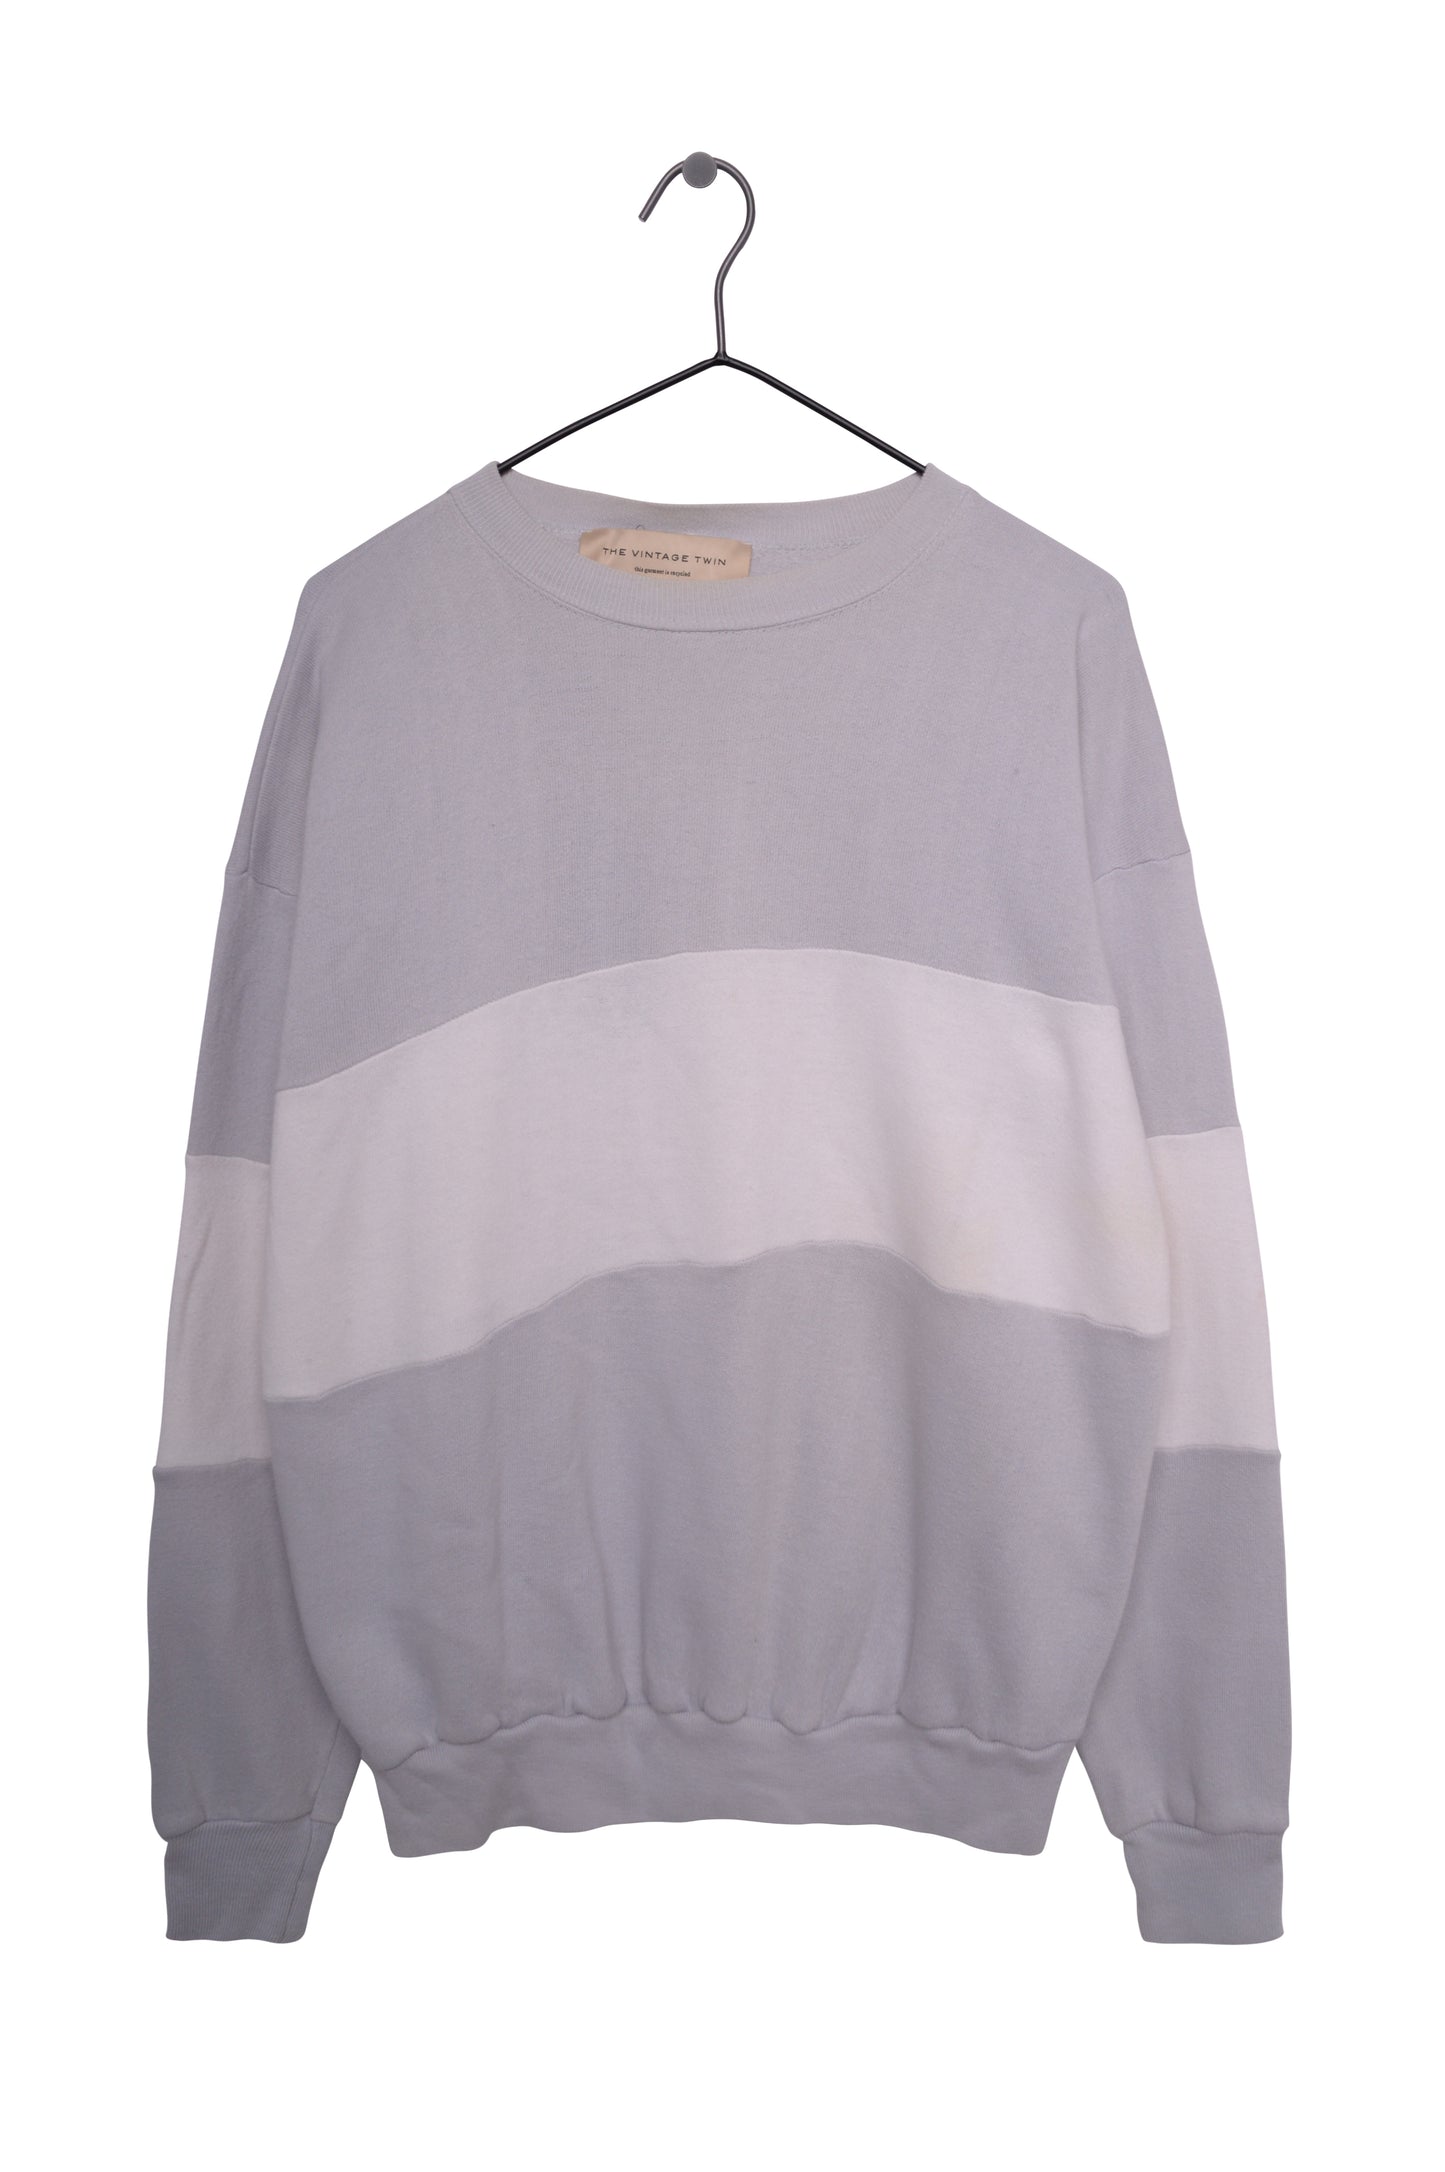 Gray Stripe Sweatshirt